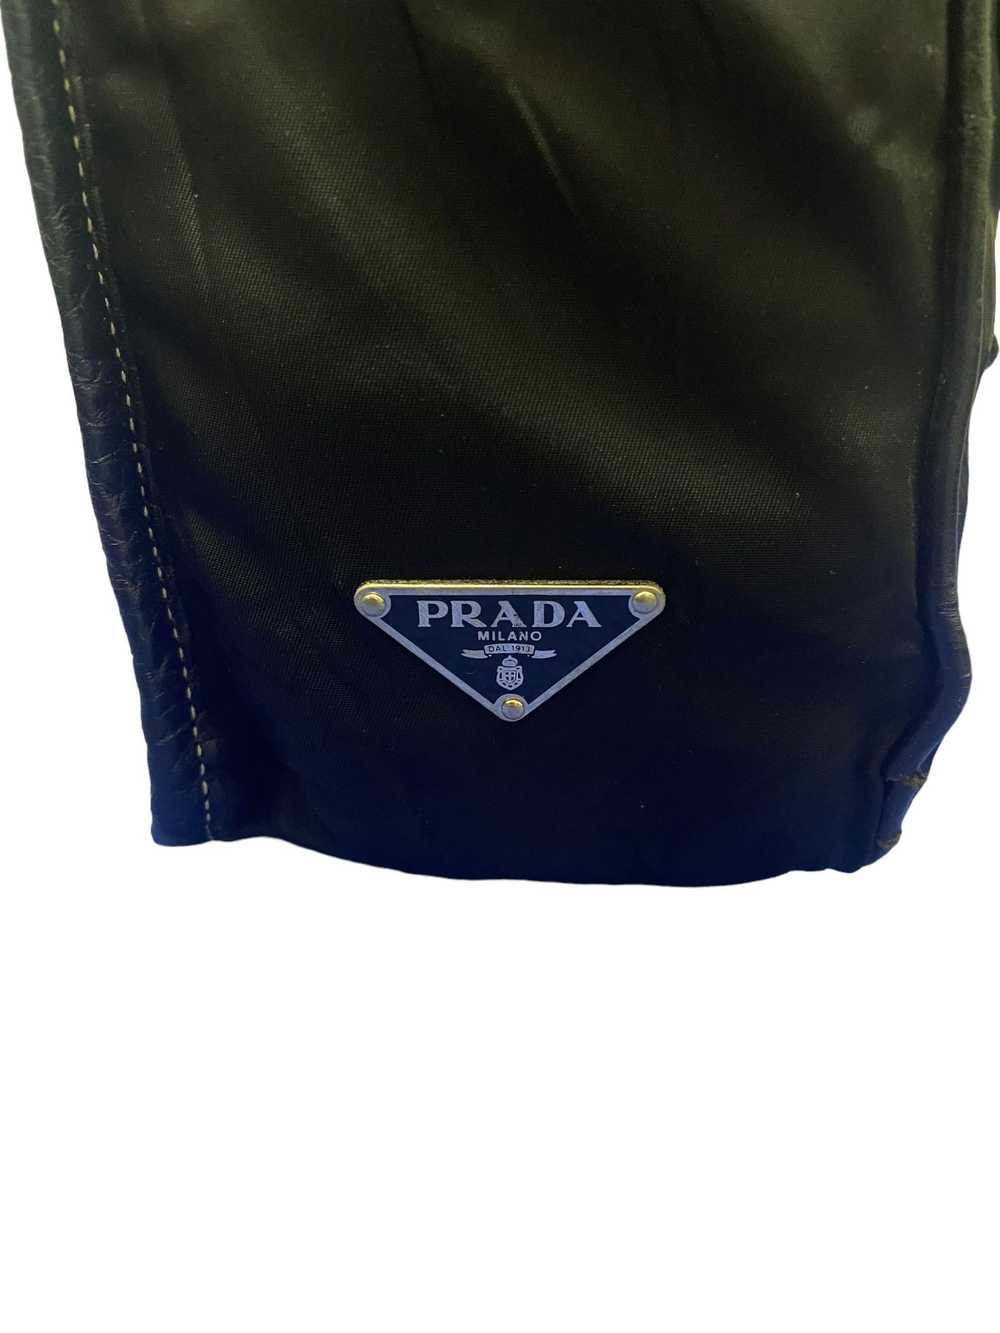 Prada Prada Vintage Nylon Shoulder Crossbody Bag - image 5